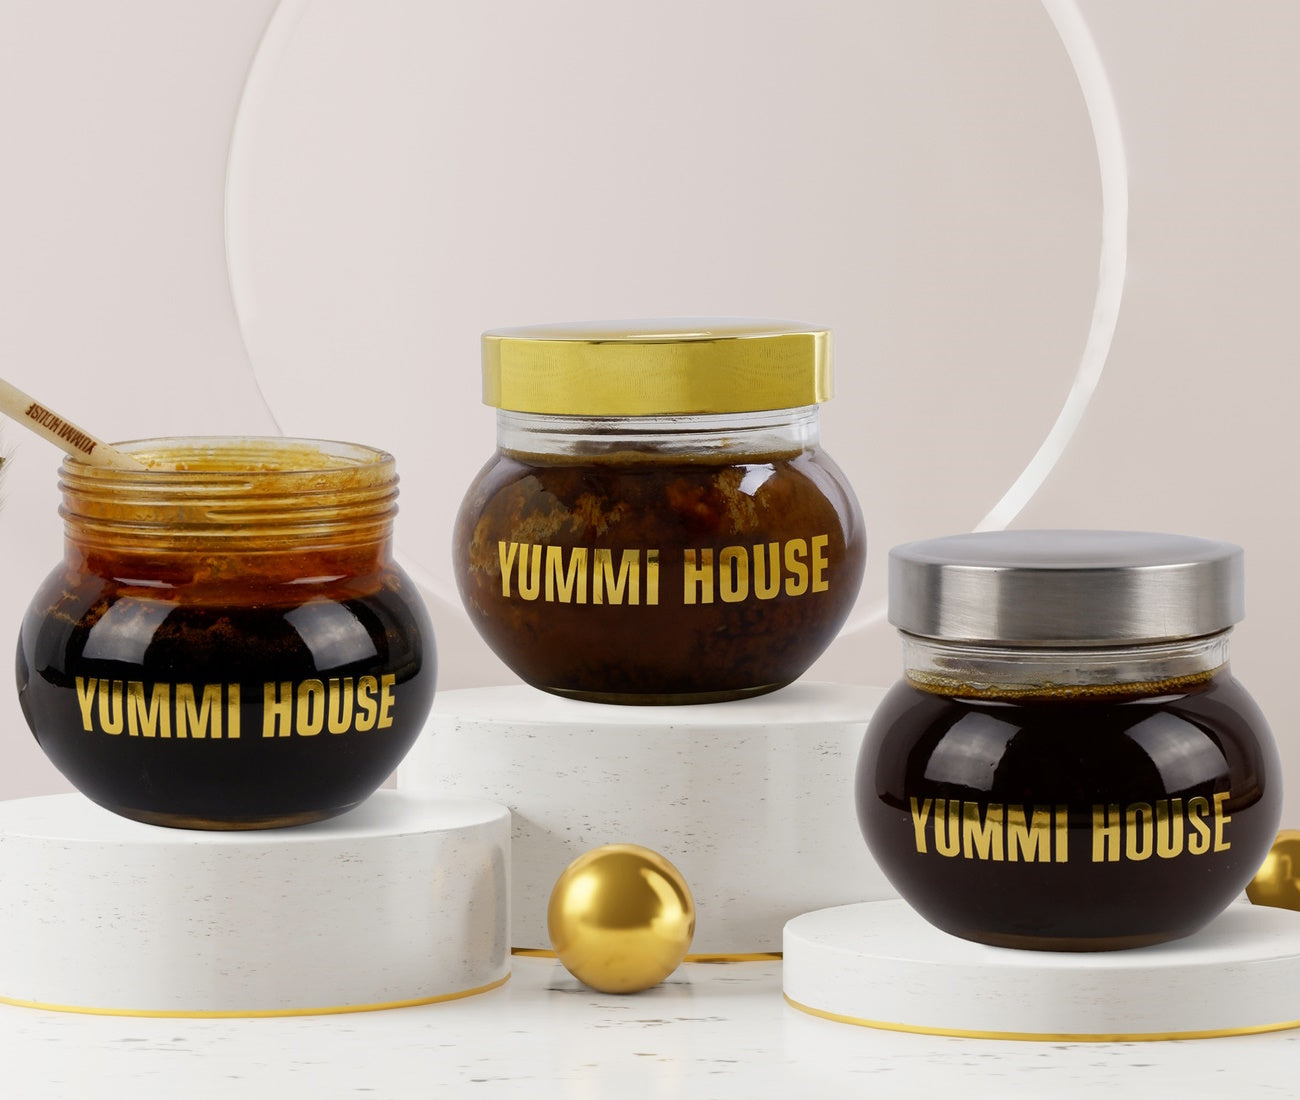 yummi house natural health product honey in jars